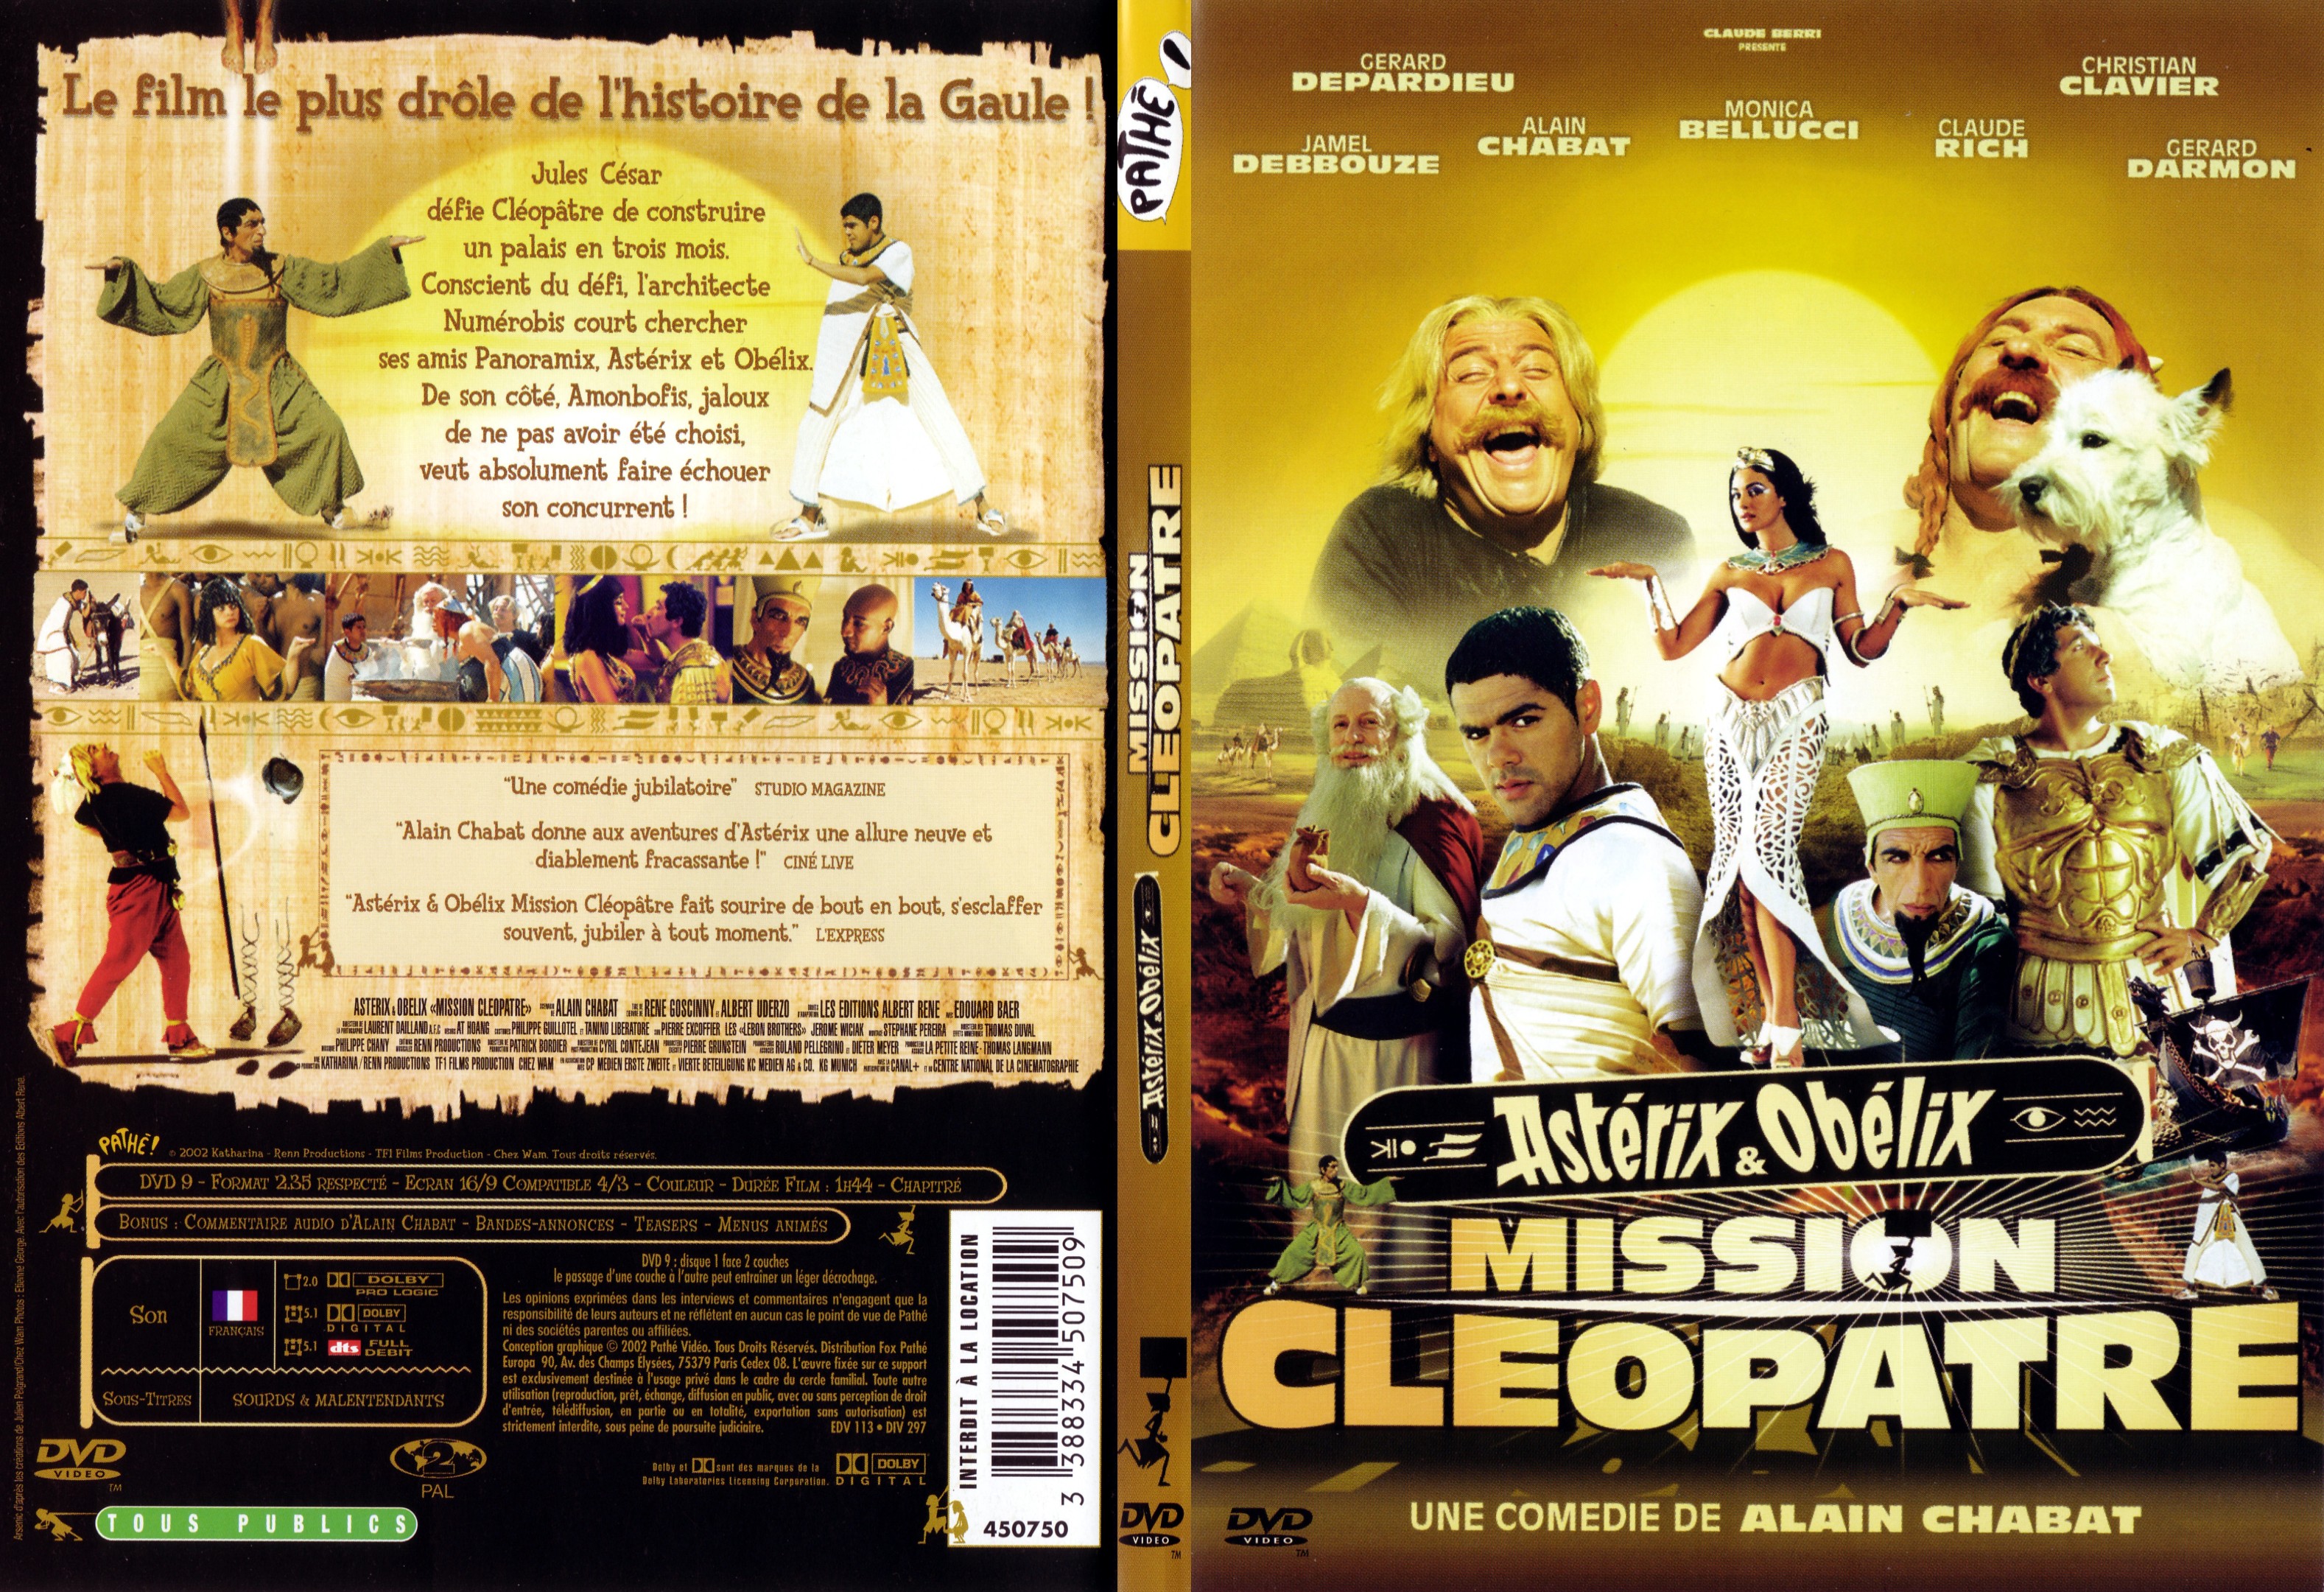 Jaquette DVD Astrix et Oblix Mission Clopatre - SLIM v3